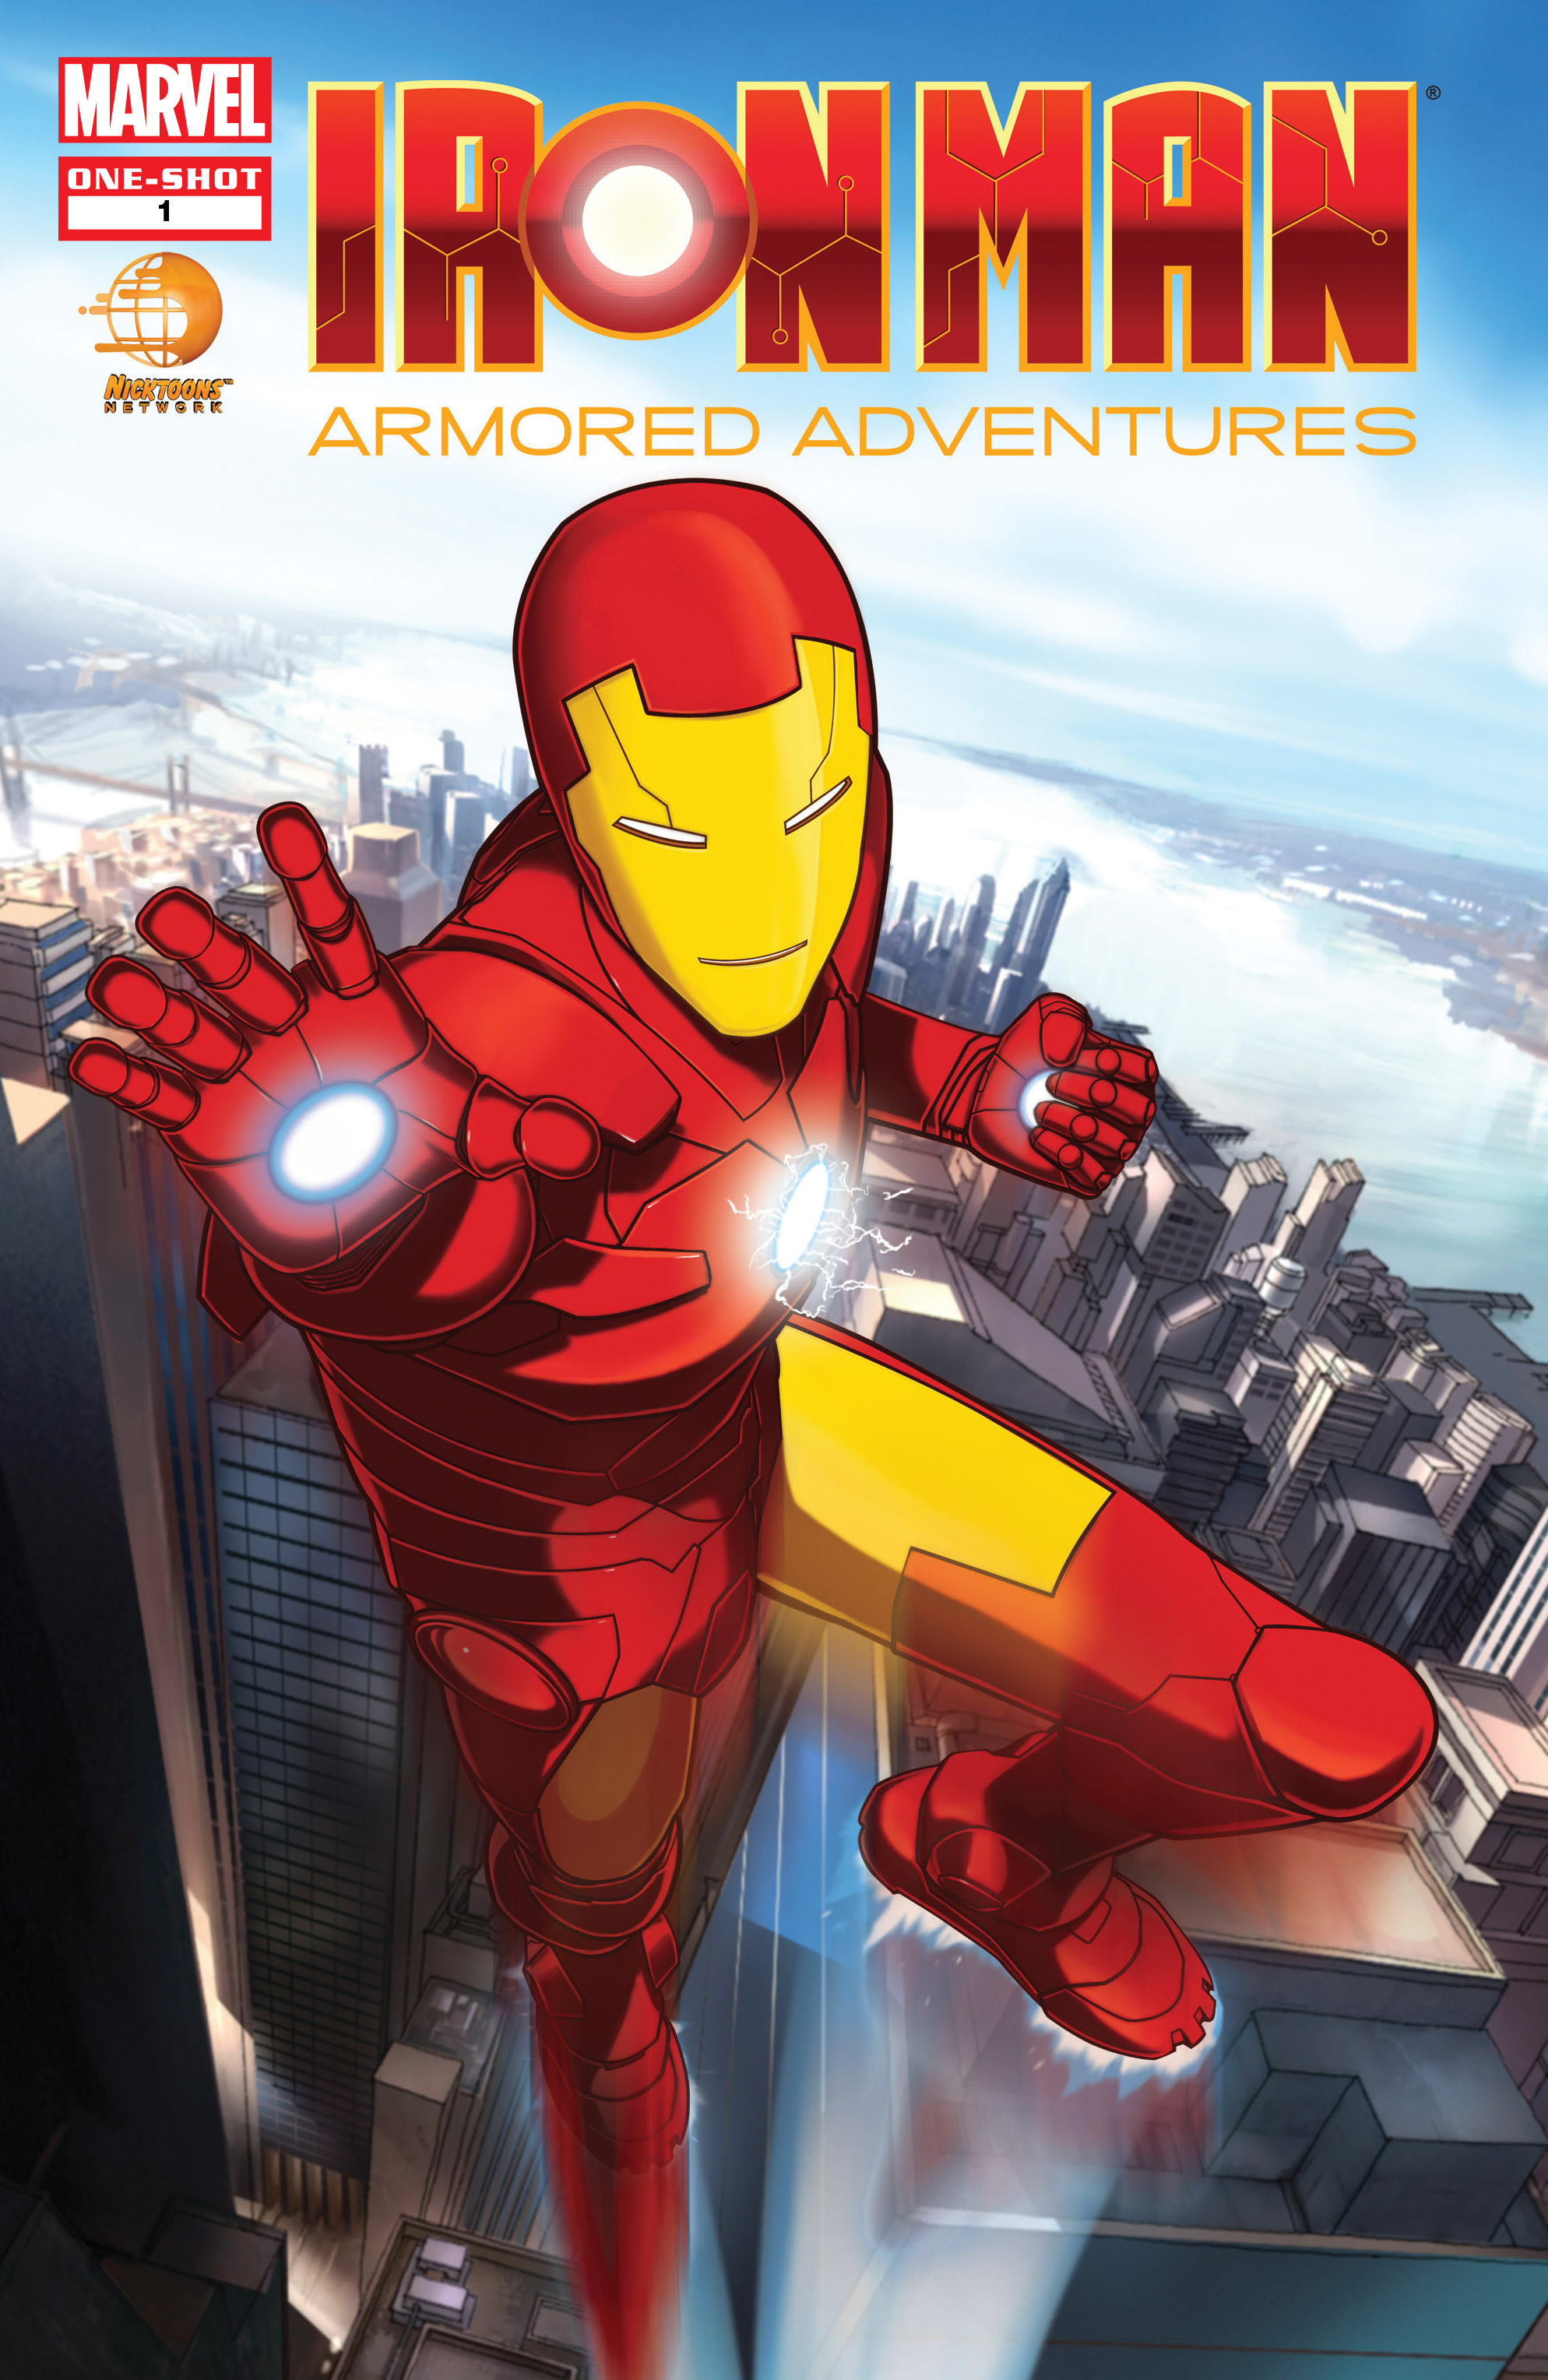 Iron Man Armored Adventures Full | Read Iron Man Armored Adventures Full  comic online in high quality. Read Full Comic online for free - Read comics  online in high quality .|viewcomiconline.com